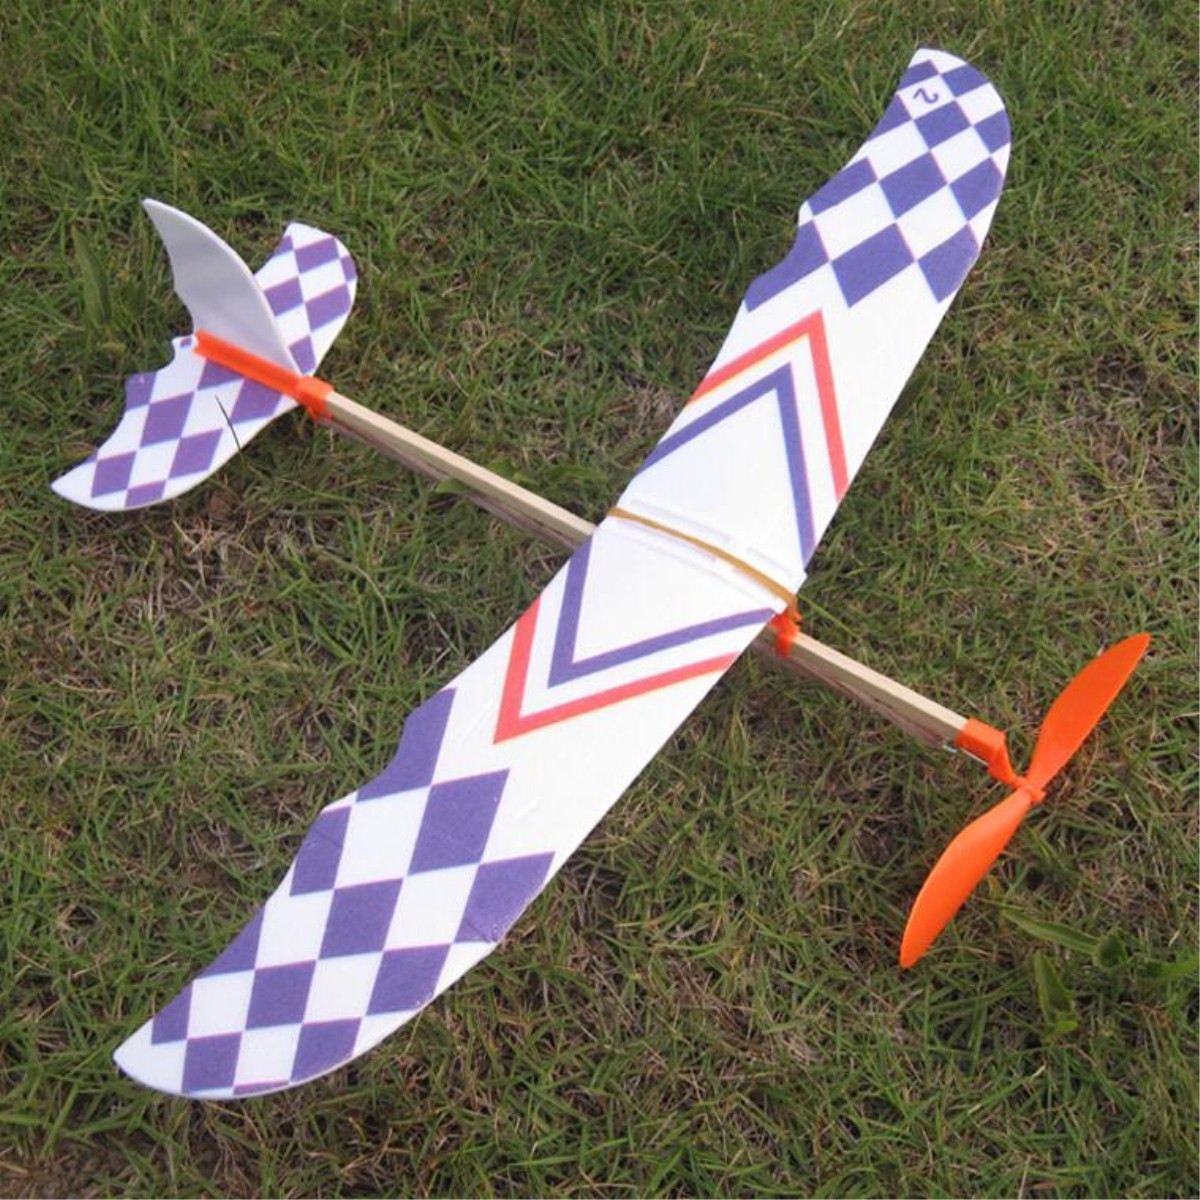 10-PCS-DIY-Foam-Elastic-Powered-Glider-Plane-Toy-Thunderbird-Flying-Model-Aircraft-Toy-1349740